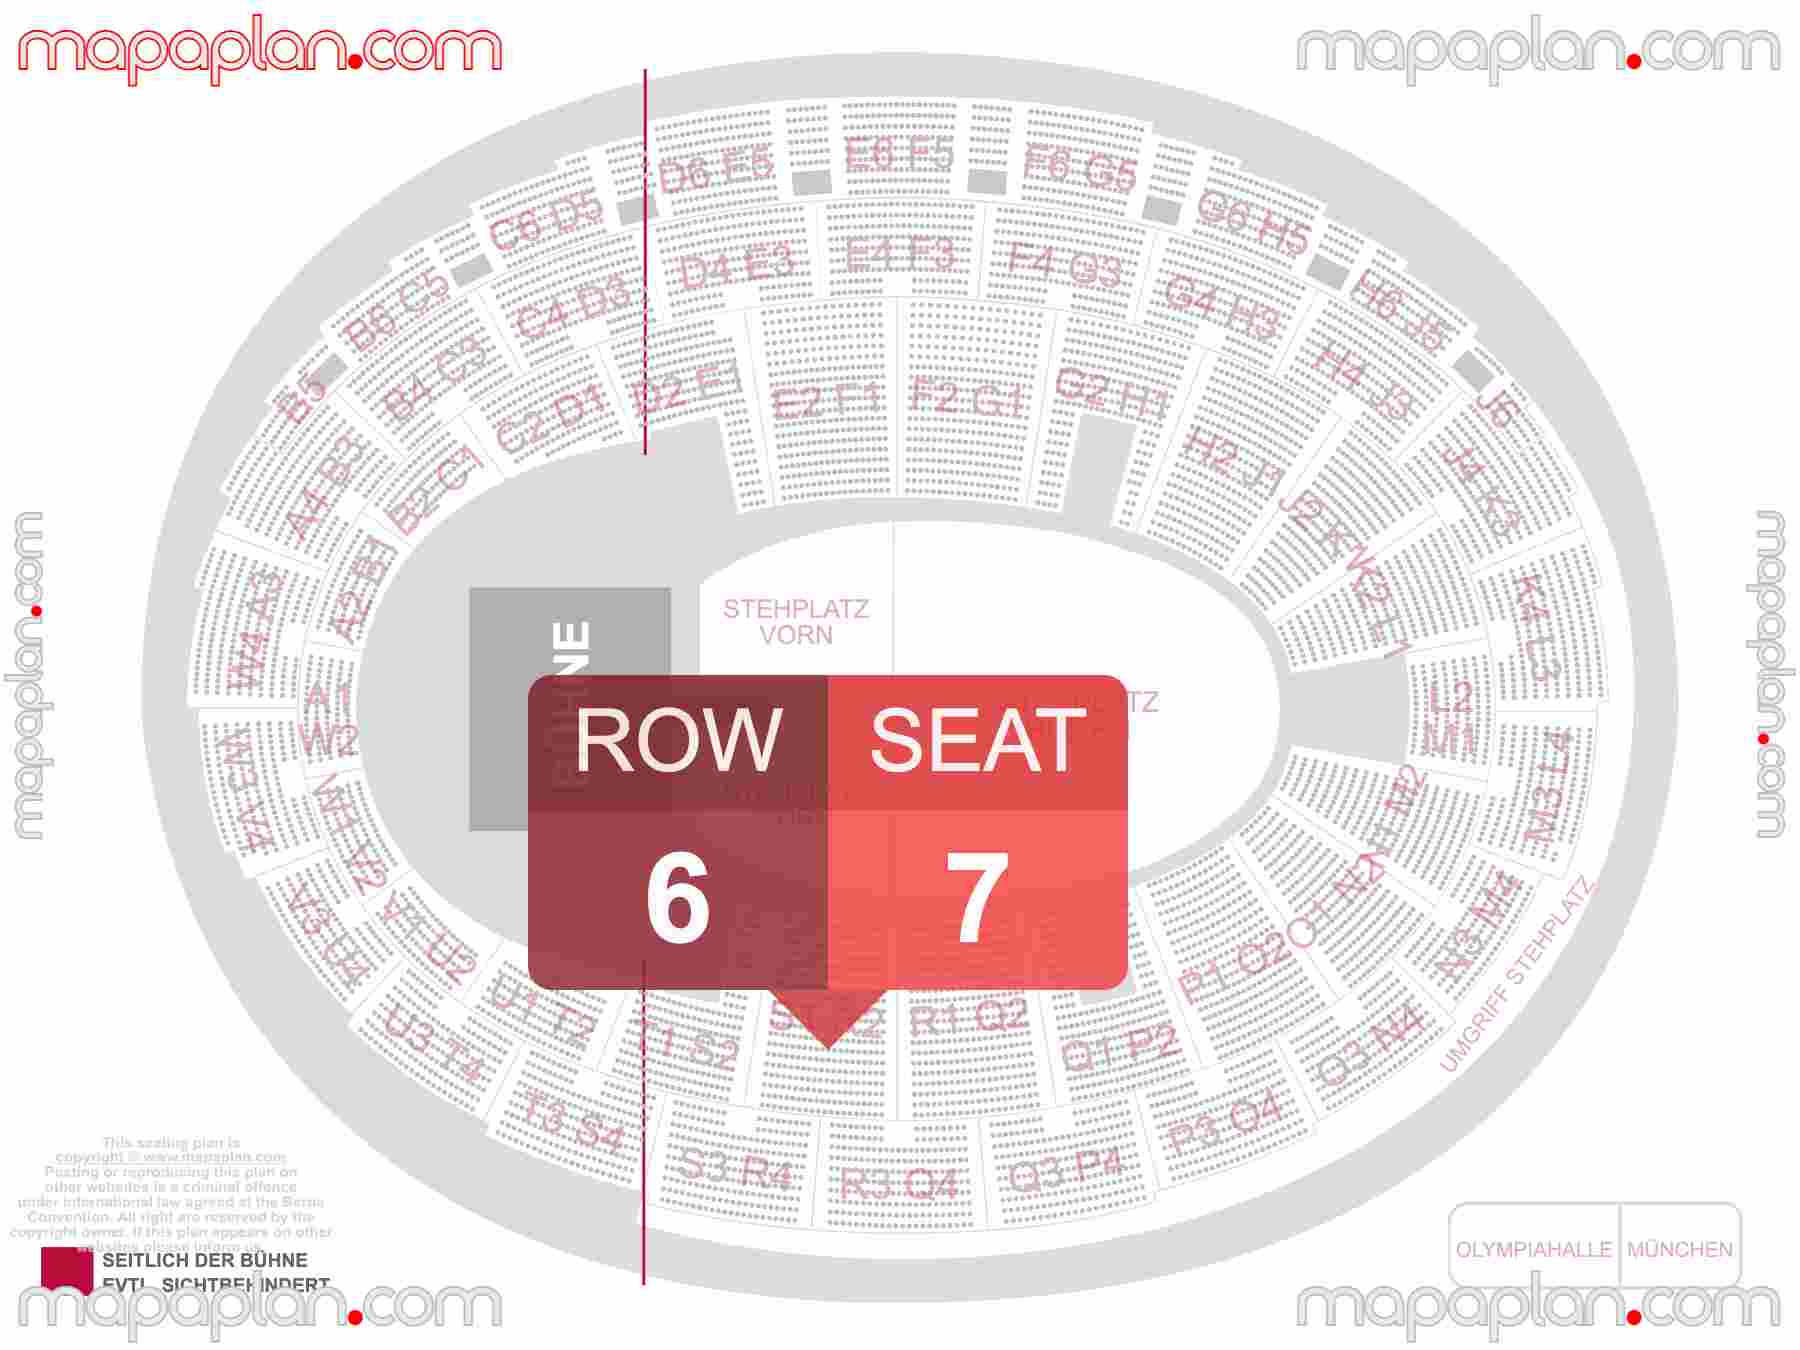 Munich Olympiahalle seating plan Concert with floor general admission PIT standing Übersichtsplan mit Innenraum Steh- & Sitzplätze Numerierung & Reihen detailed seating plan - 3d virtual seat numbers and row layout